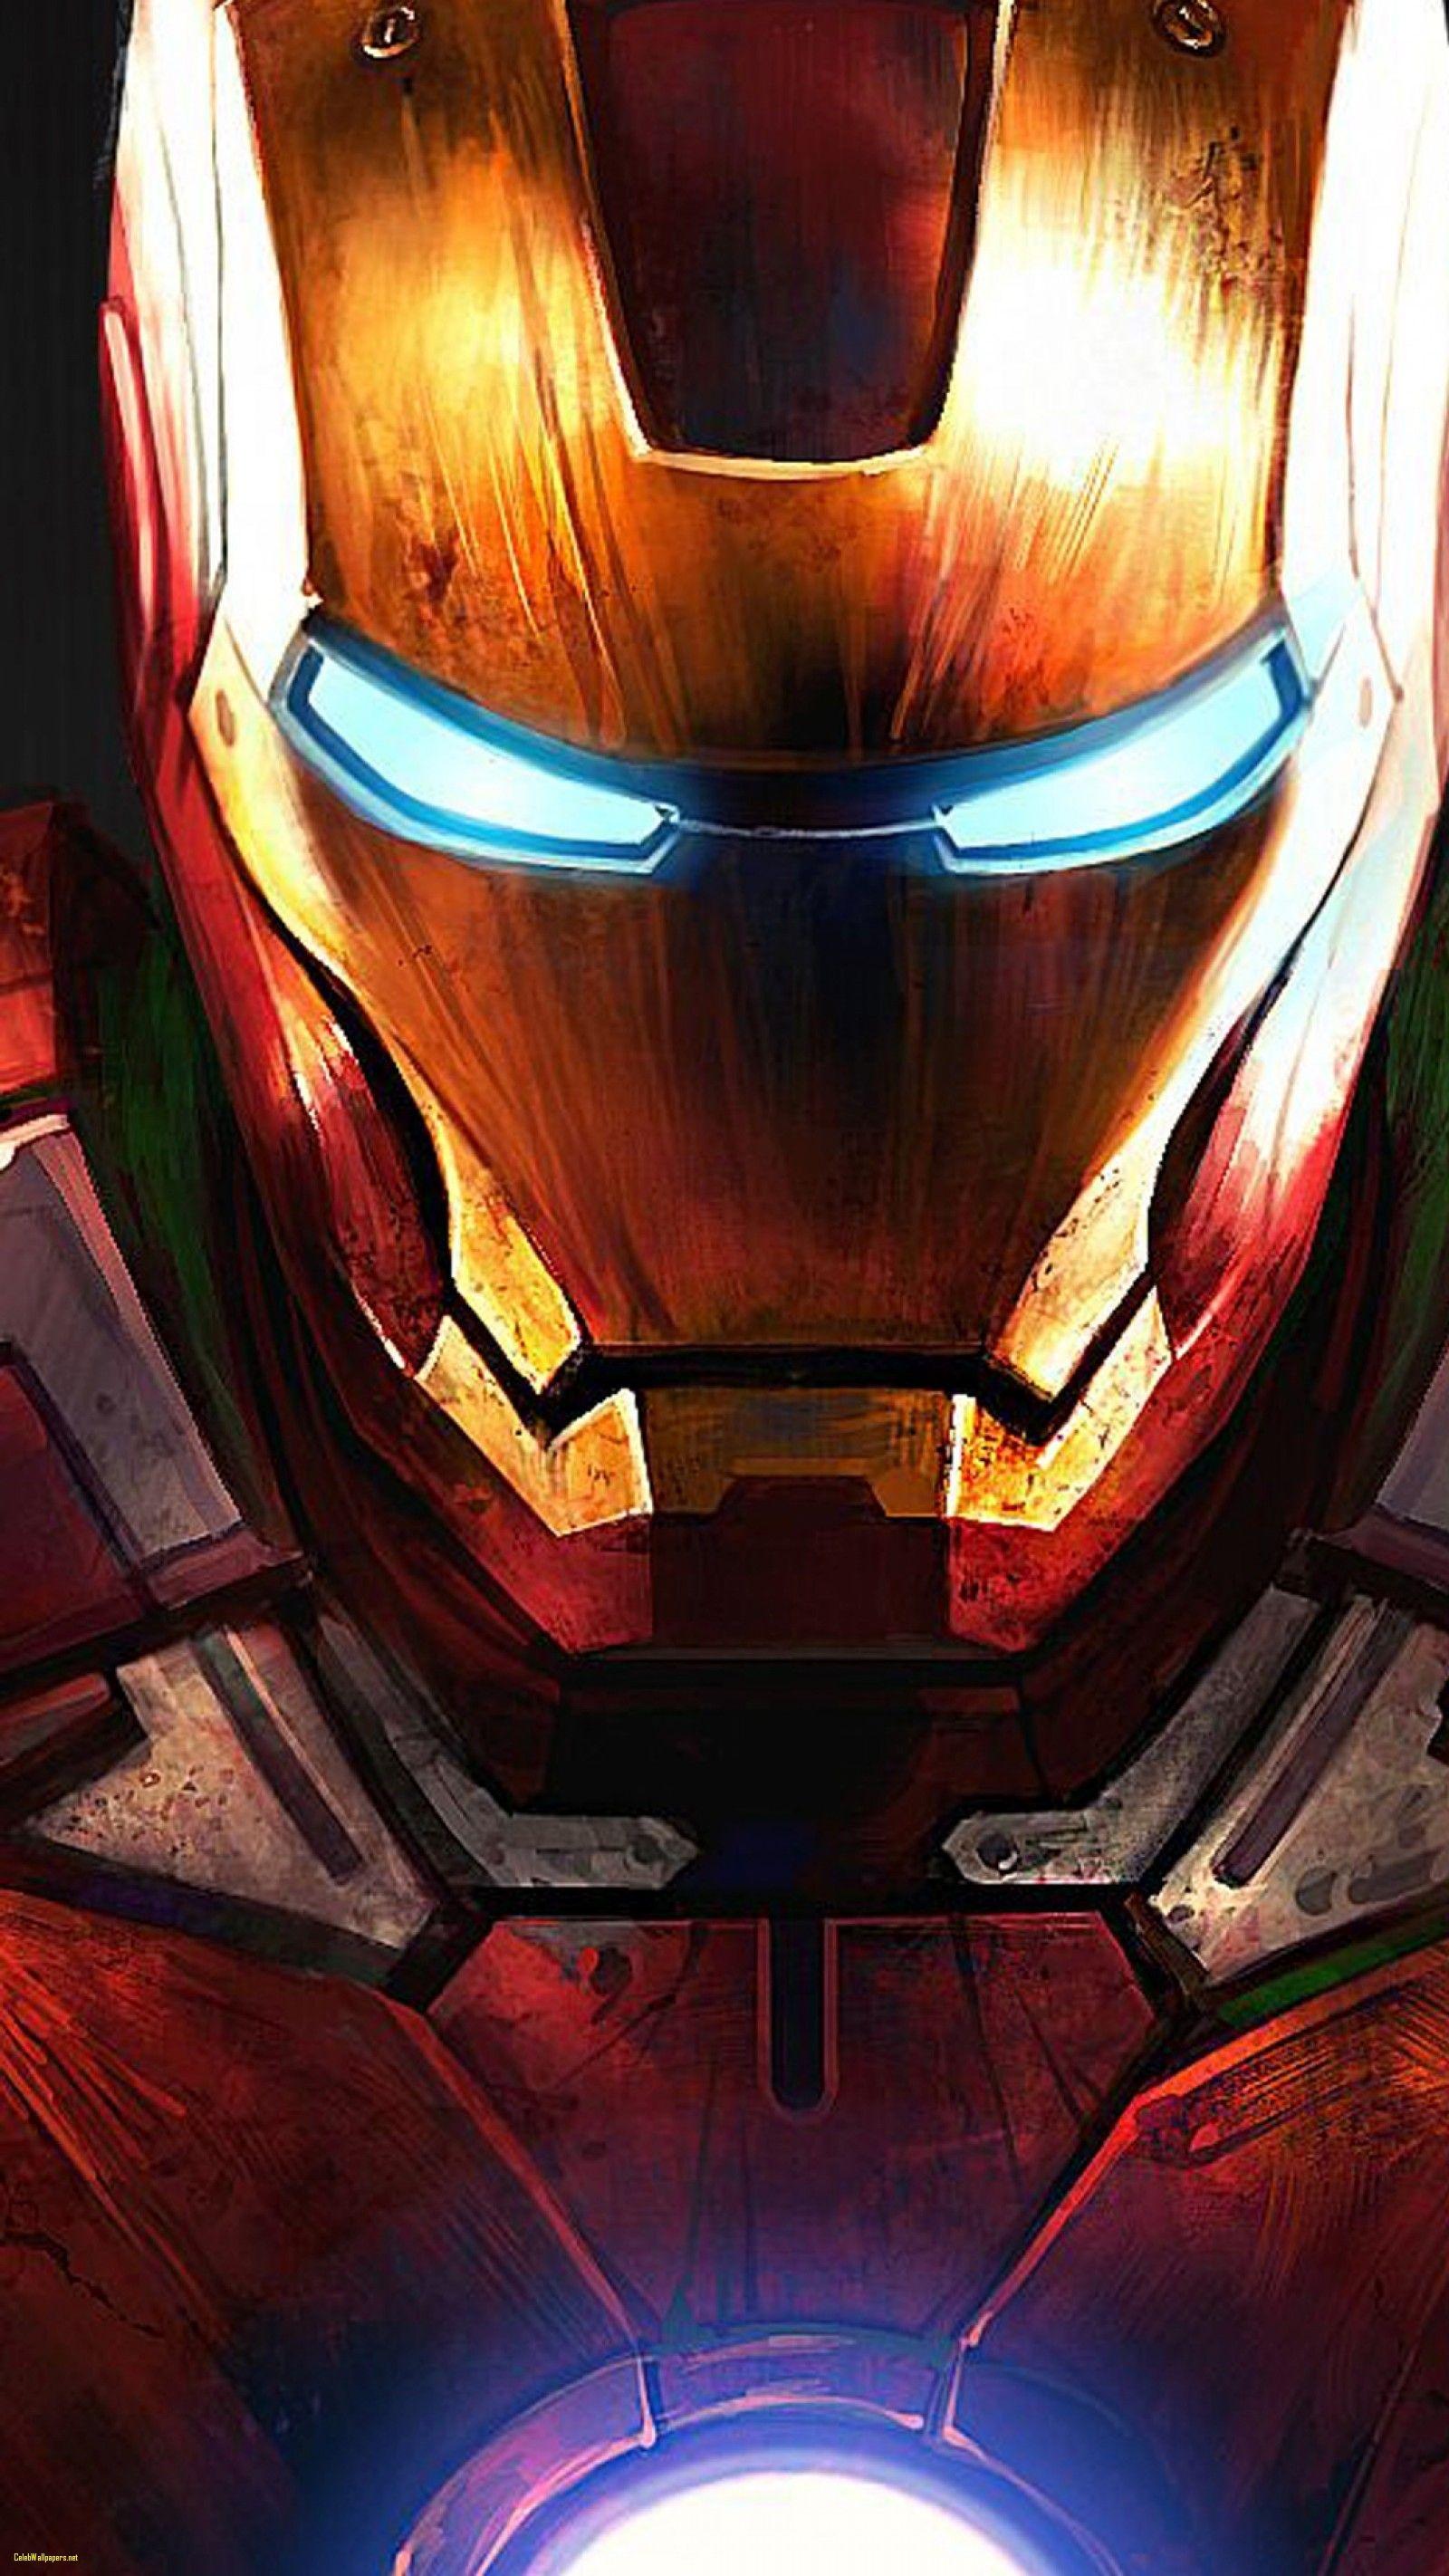 Iron Man Iphone Wallpapers Top Free Iron Man Iphone Backgrounds Wallpaperaccess